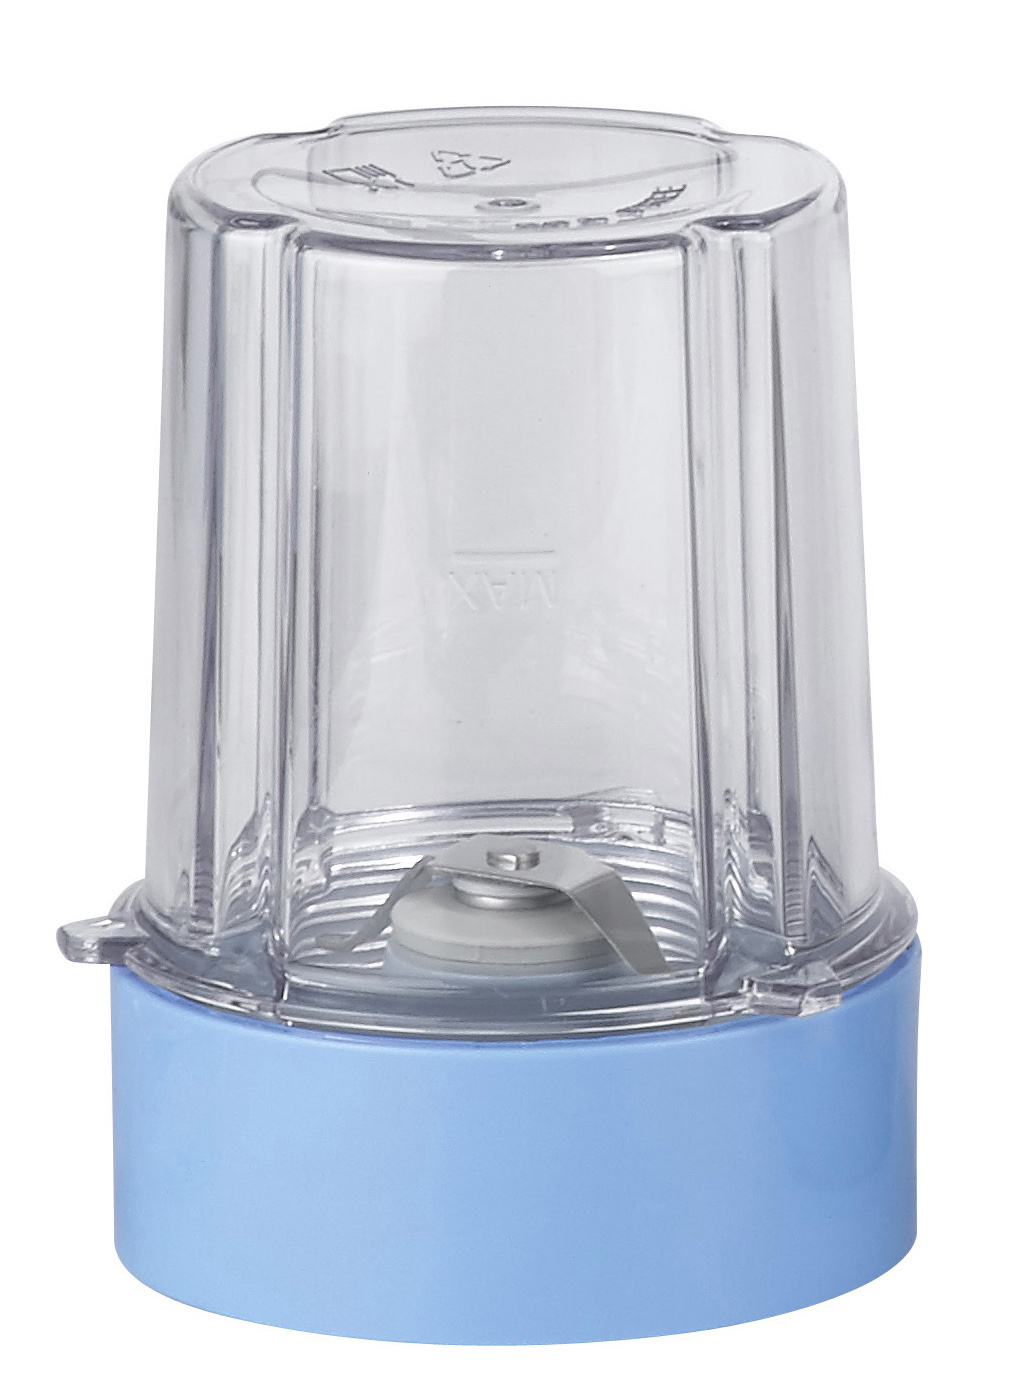 BLAUPUNKT Liter) TBP601BL (700 1.2 Blau/Grau Watt, Standmixer